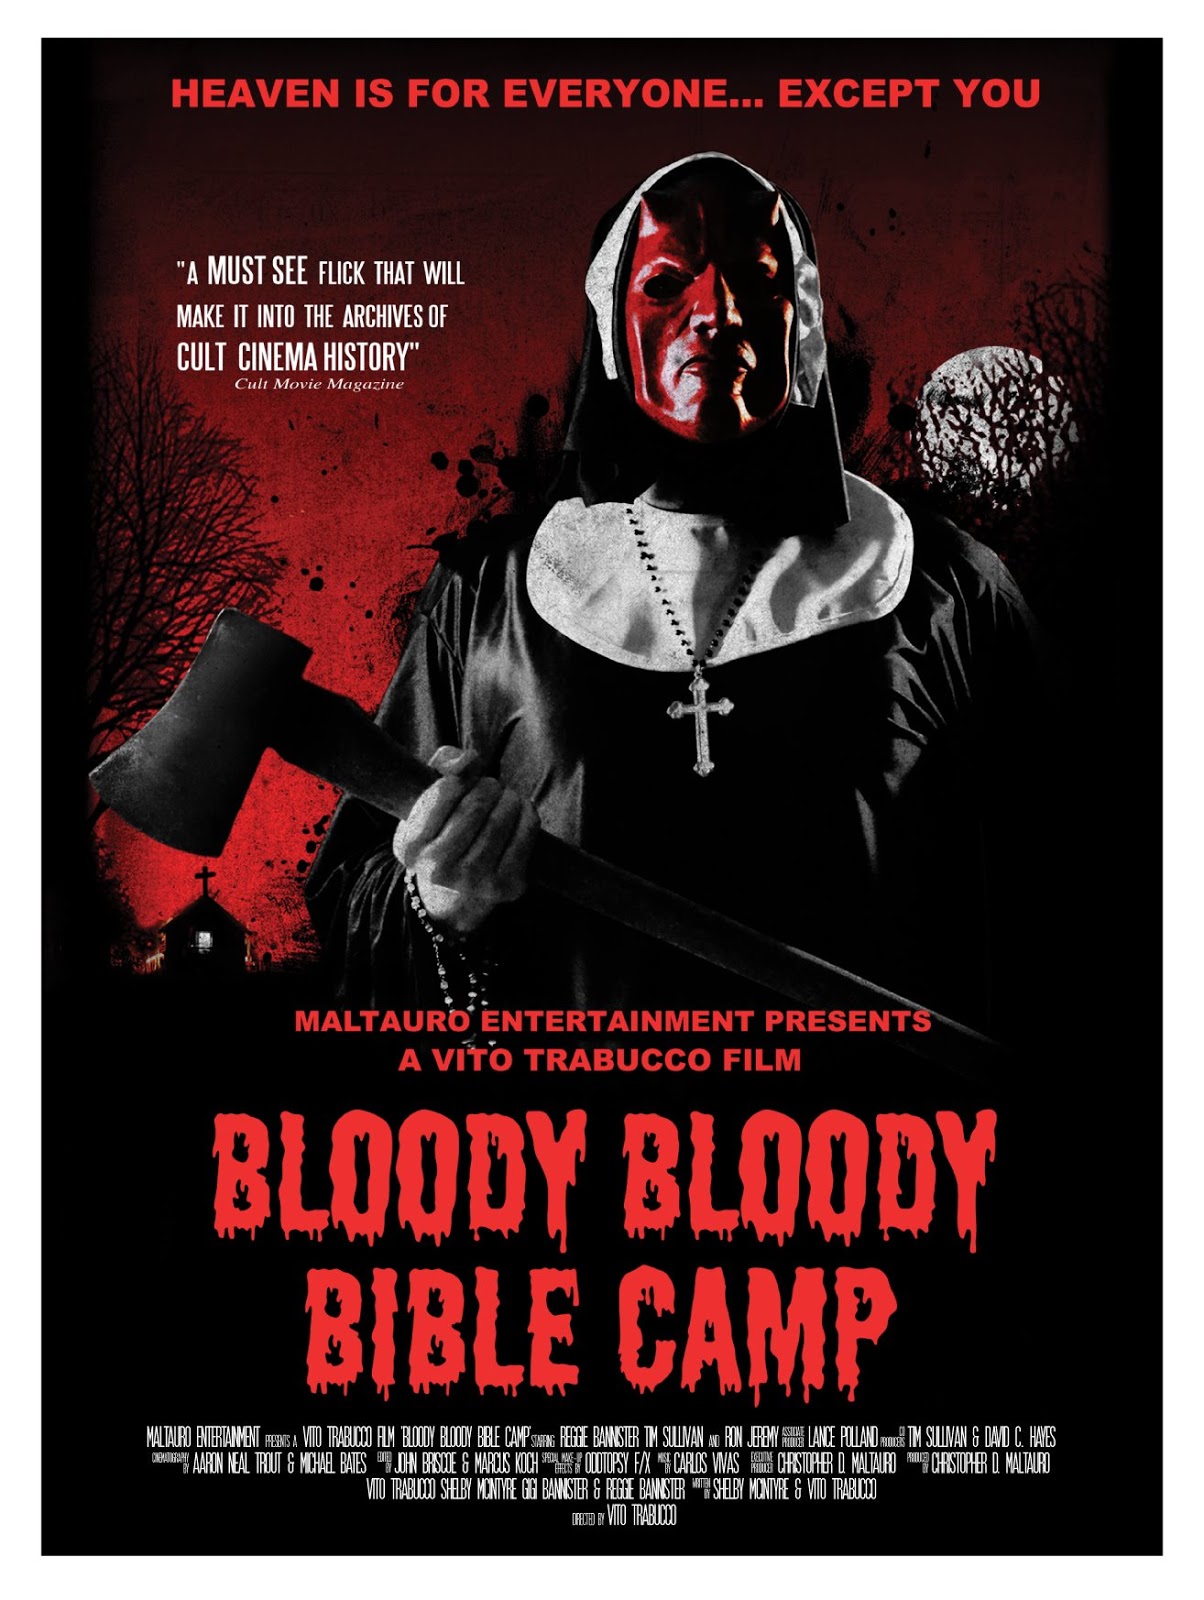 http://3.bp.blogspot.com/-EUcCzm-nOIA/UHgt4M7rSFI/AAAAAAAAAL0/4-WXWBckO0s/s1600/bloody-bloody-bible-camp-poster.jpg